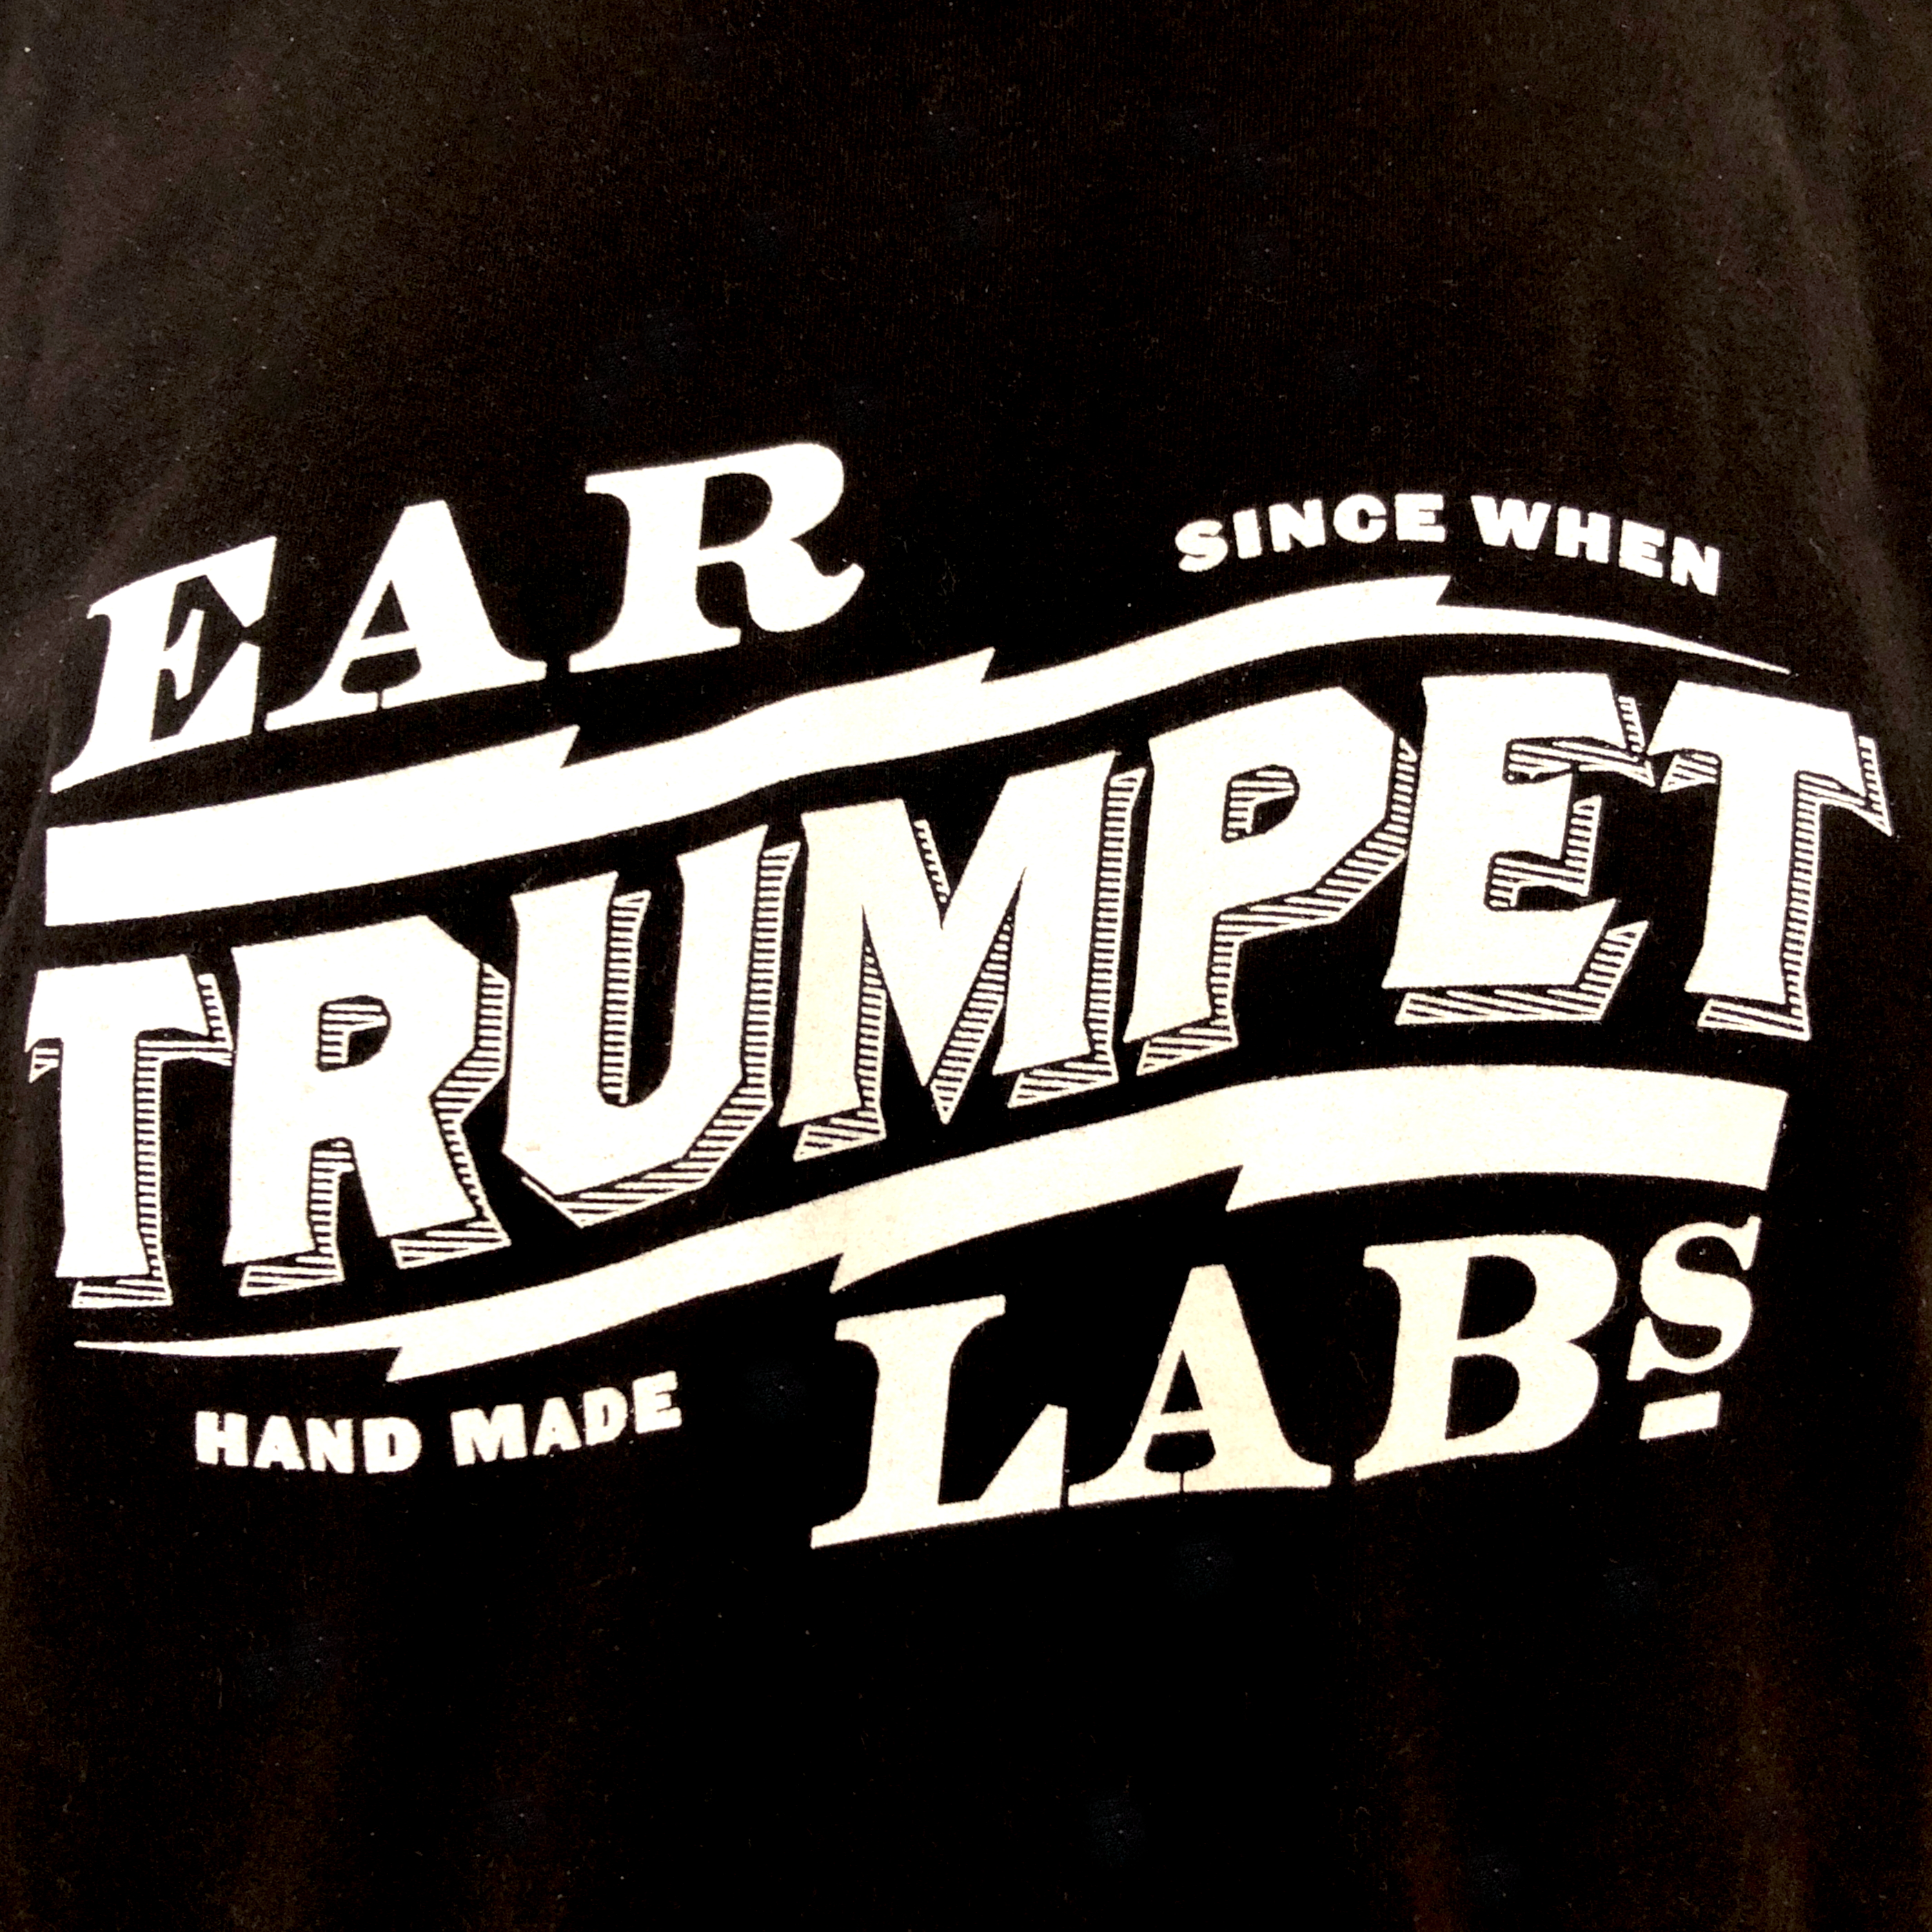 Ear Trumpet Labs T-Shirt mit Logo schwarz XL